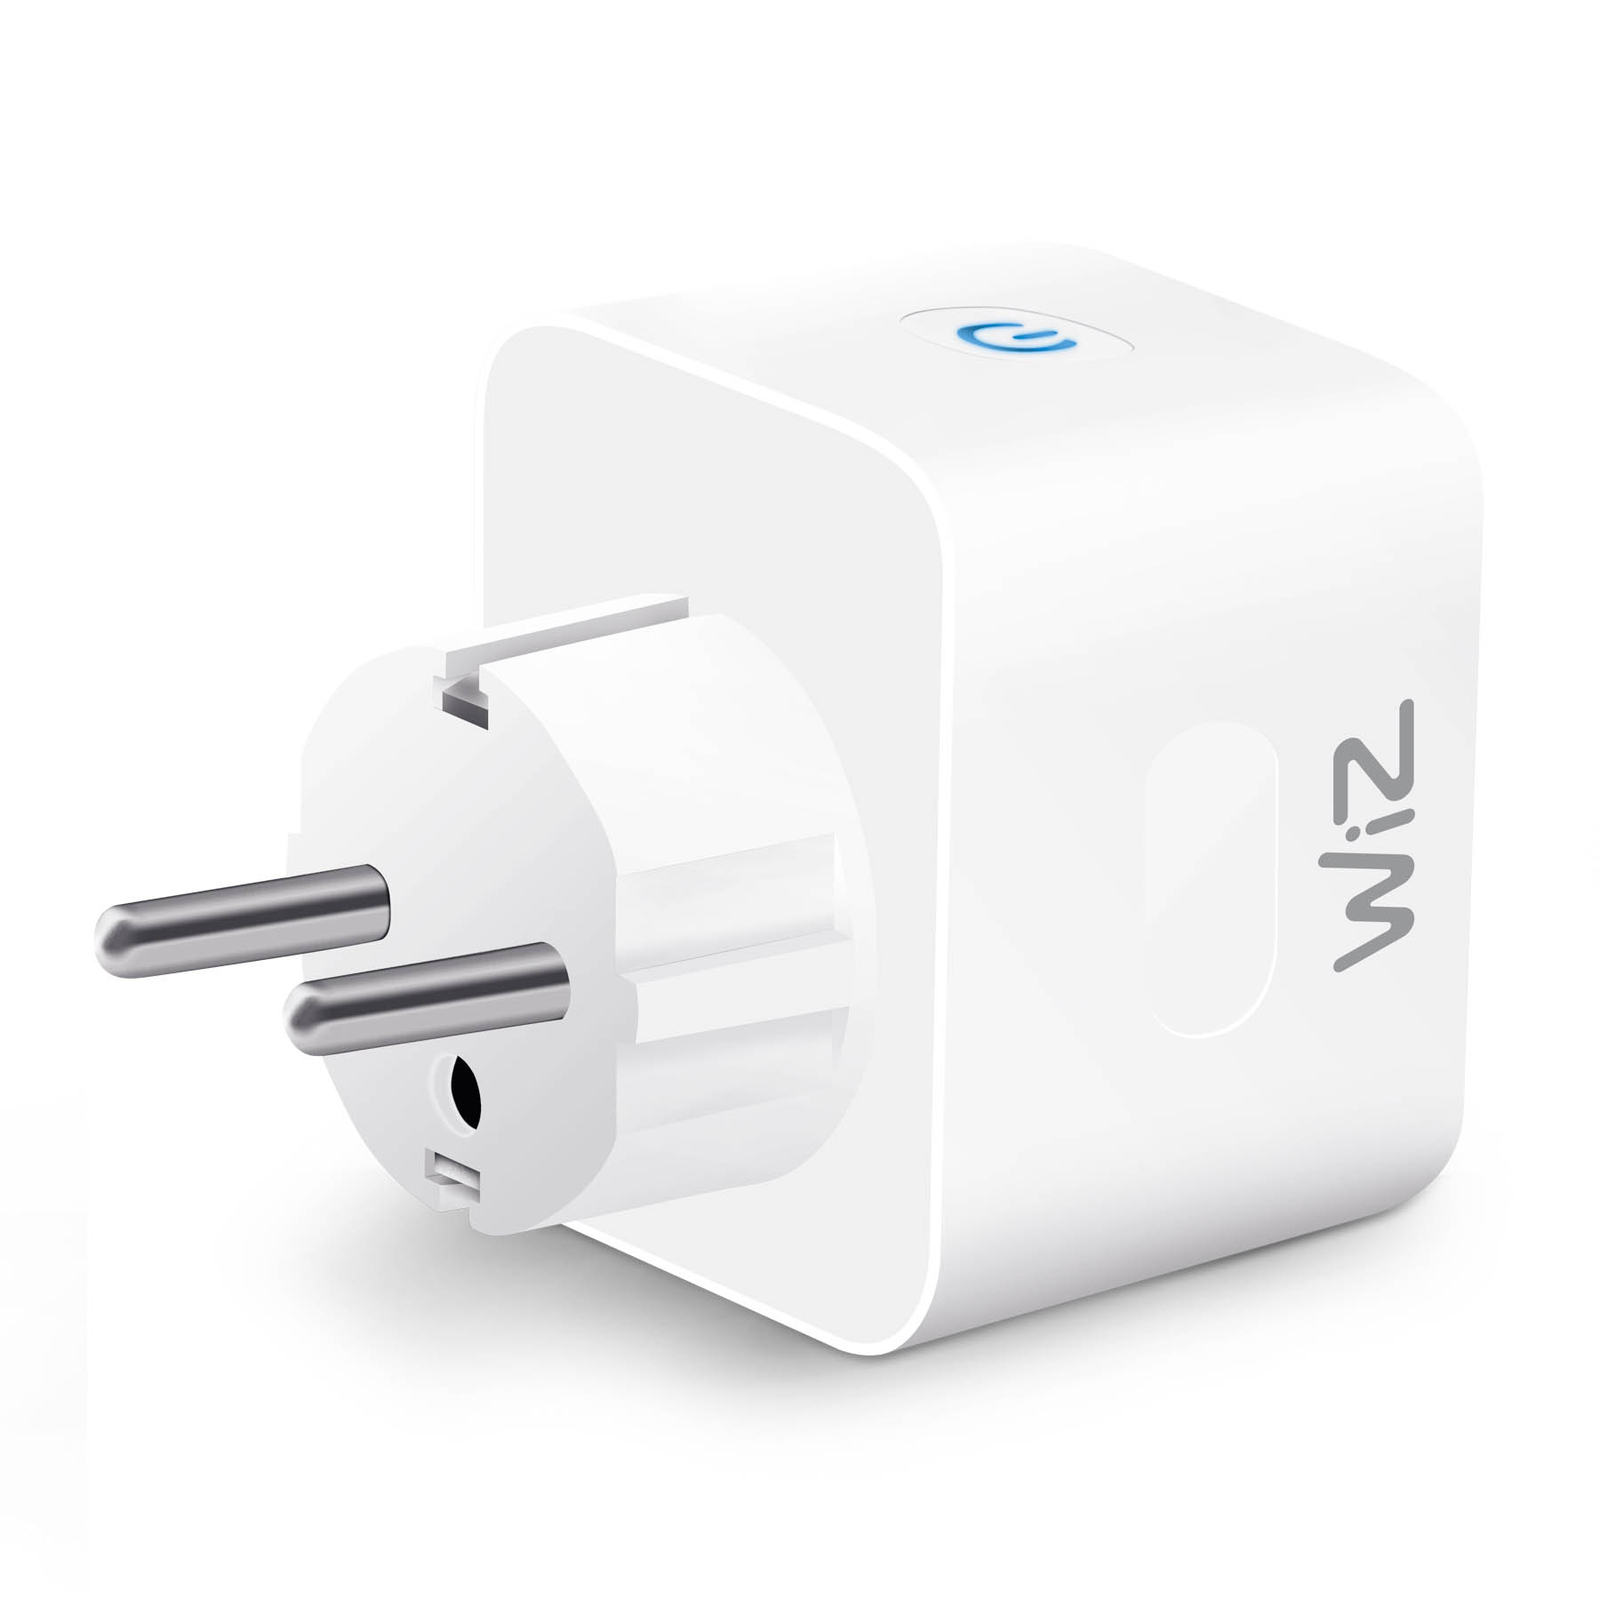 WiZ Smart Plug Type F stikkontakt for lysstyring